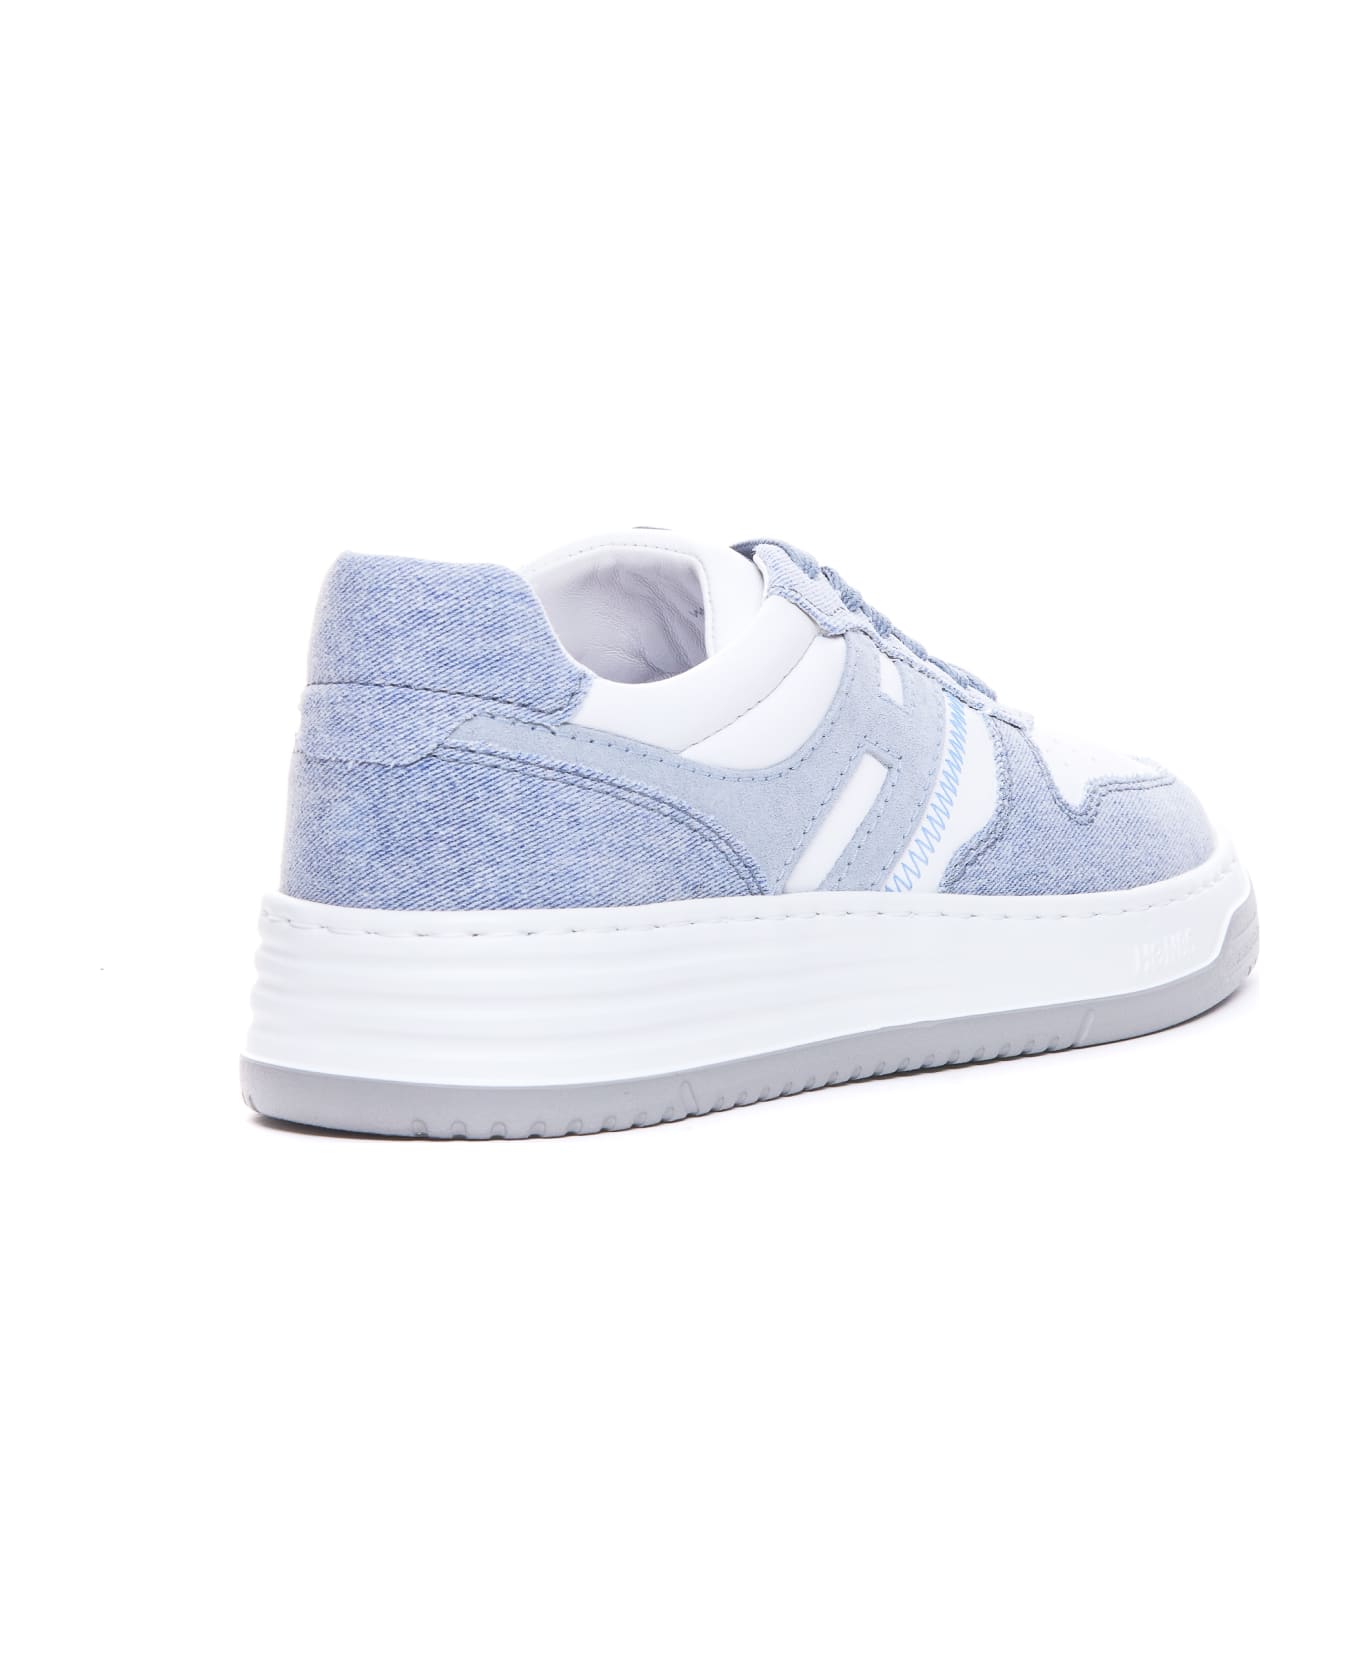 Hogan H630 Sneakers - WHITE/BLUE